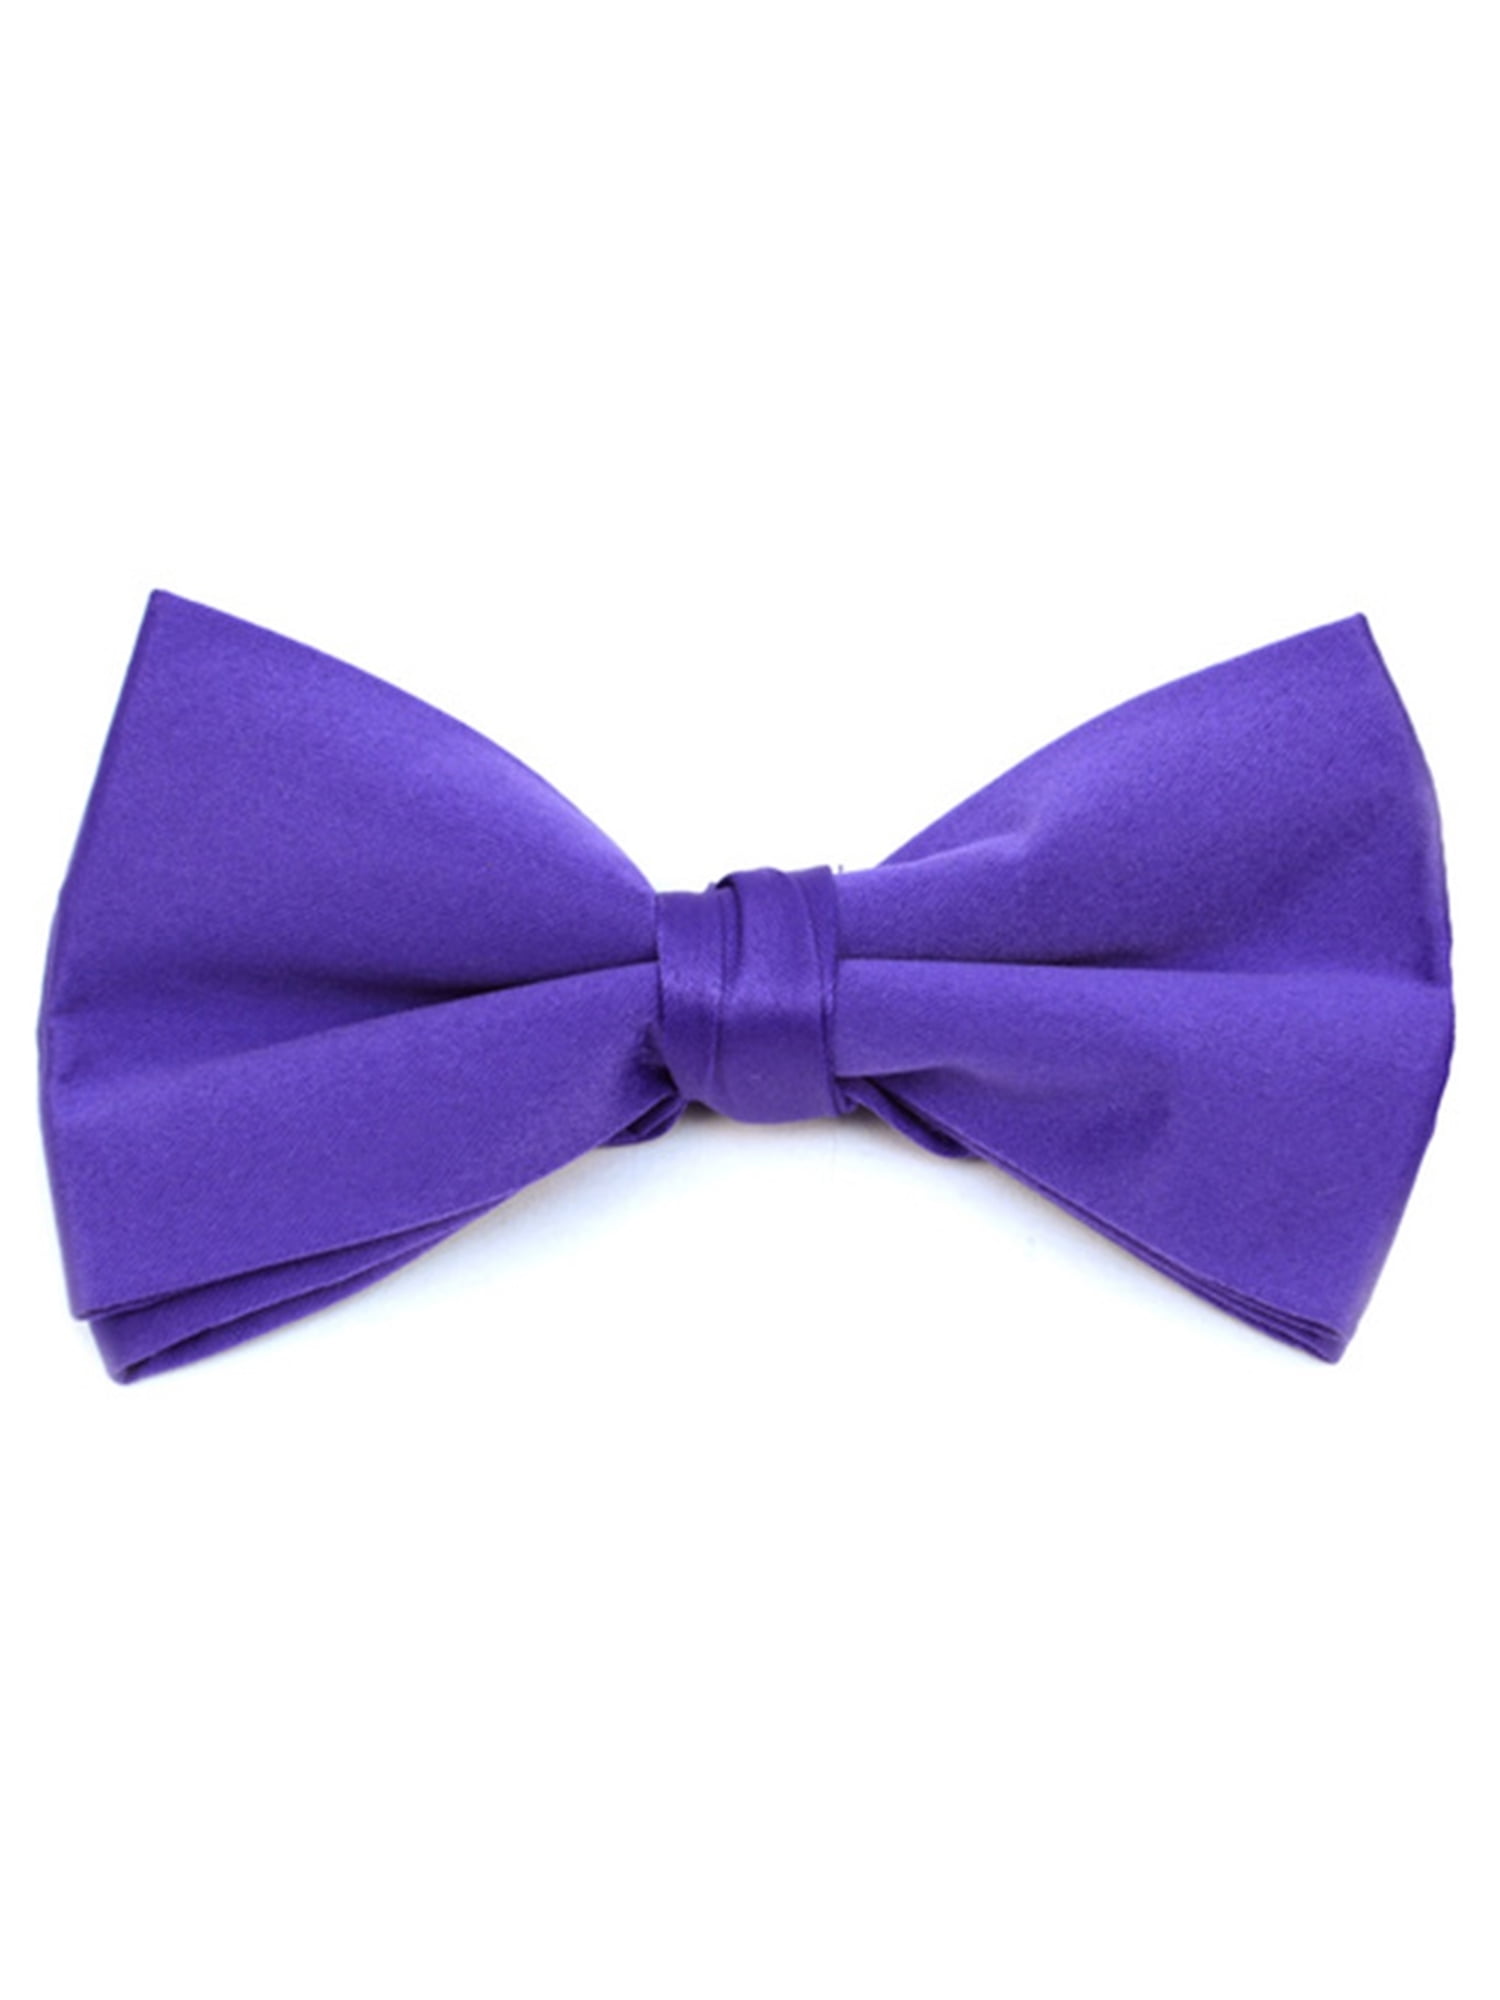 New men's pre-tied bowtie tone on tone stripes polyester formal wedding purple 